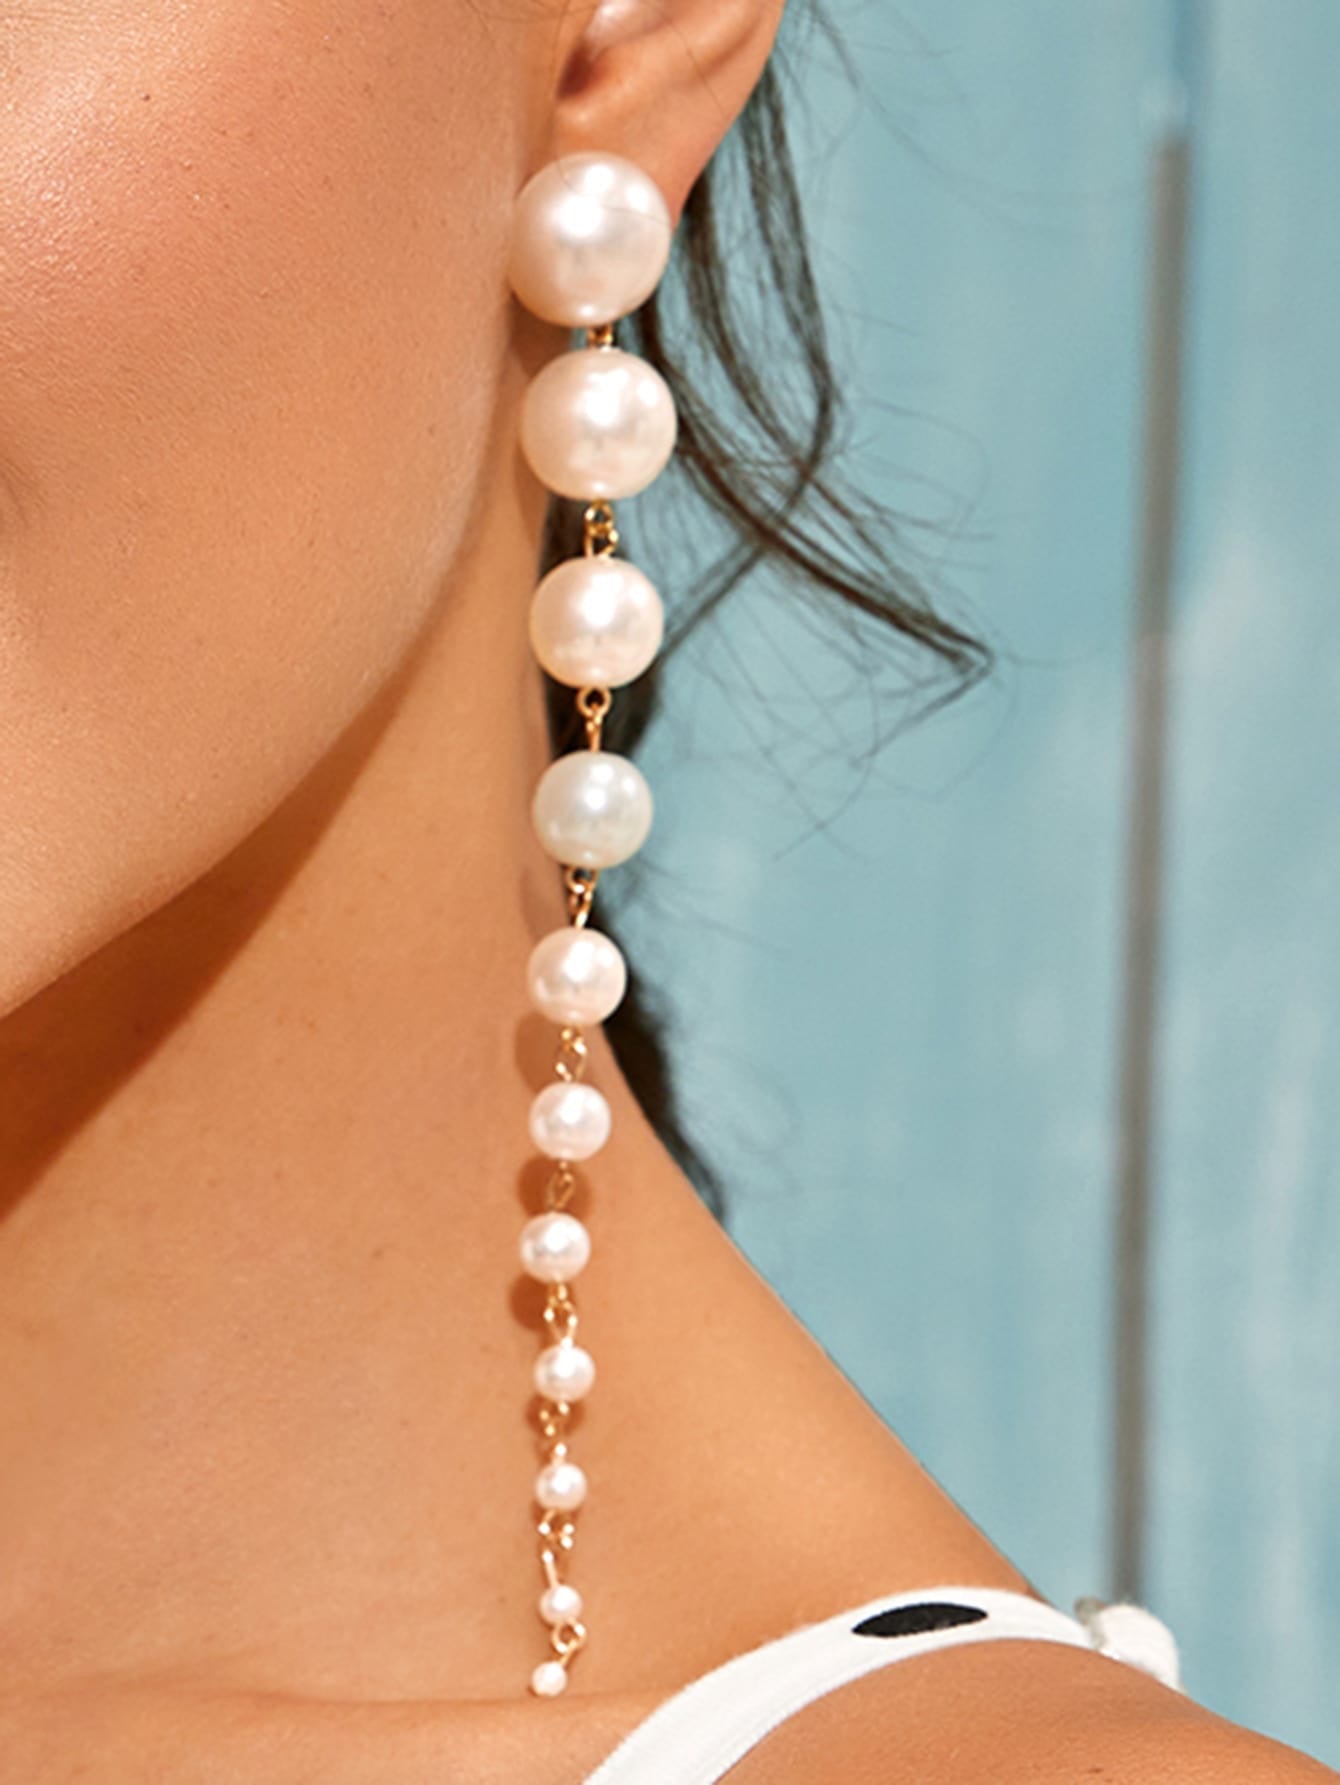 Dripping pearls earrings